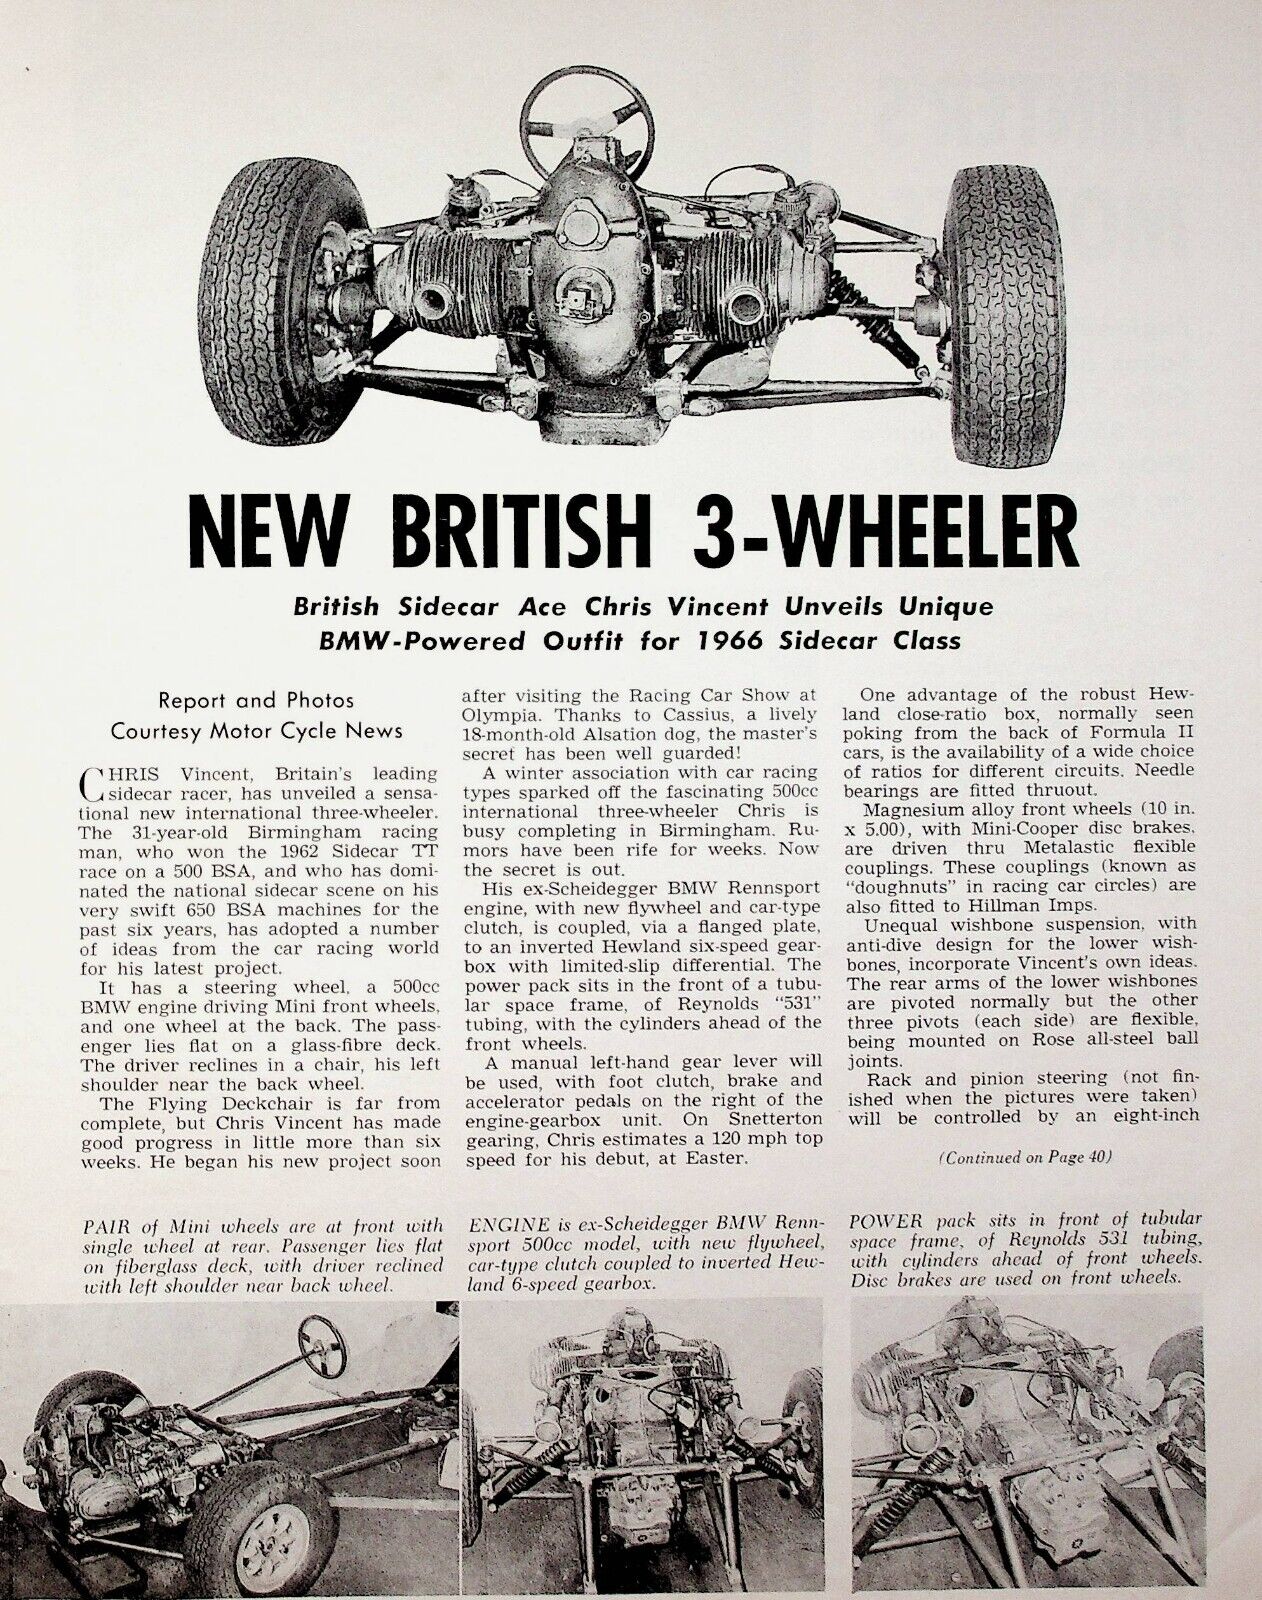 1966 British 3-Wheeler Chris Vincent Sidecar - 2-Page Vintage Motorcycle Article